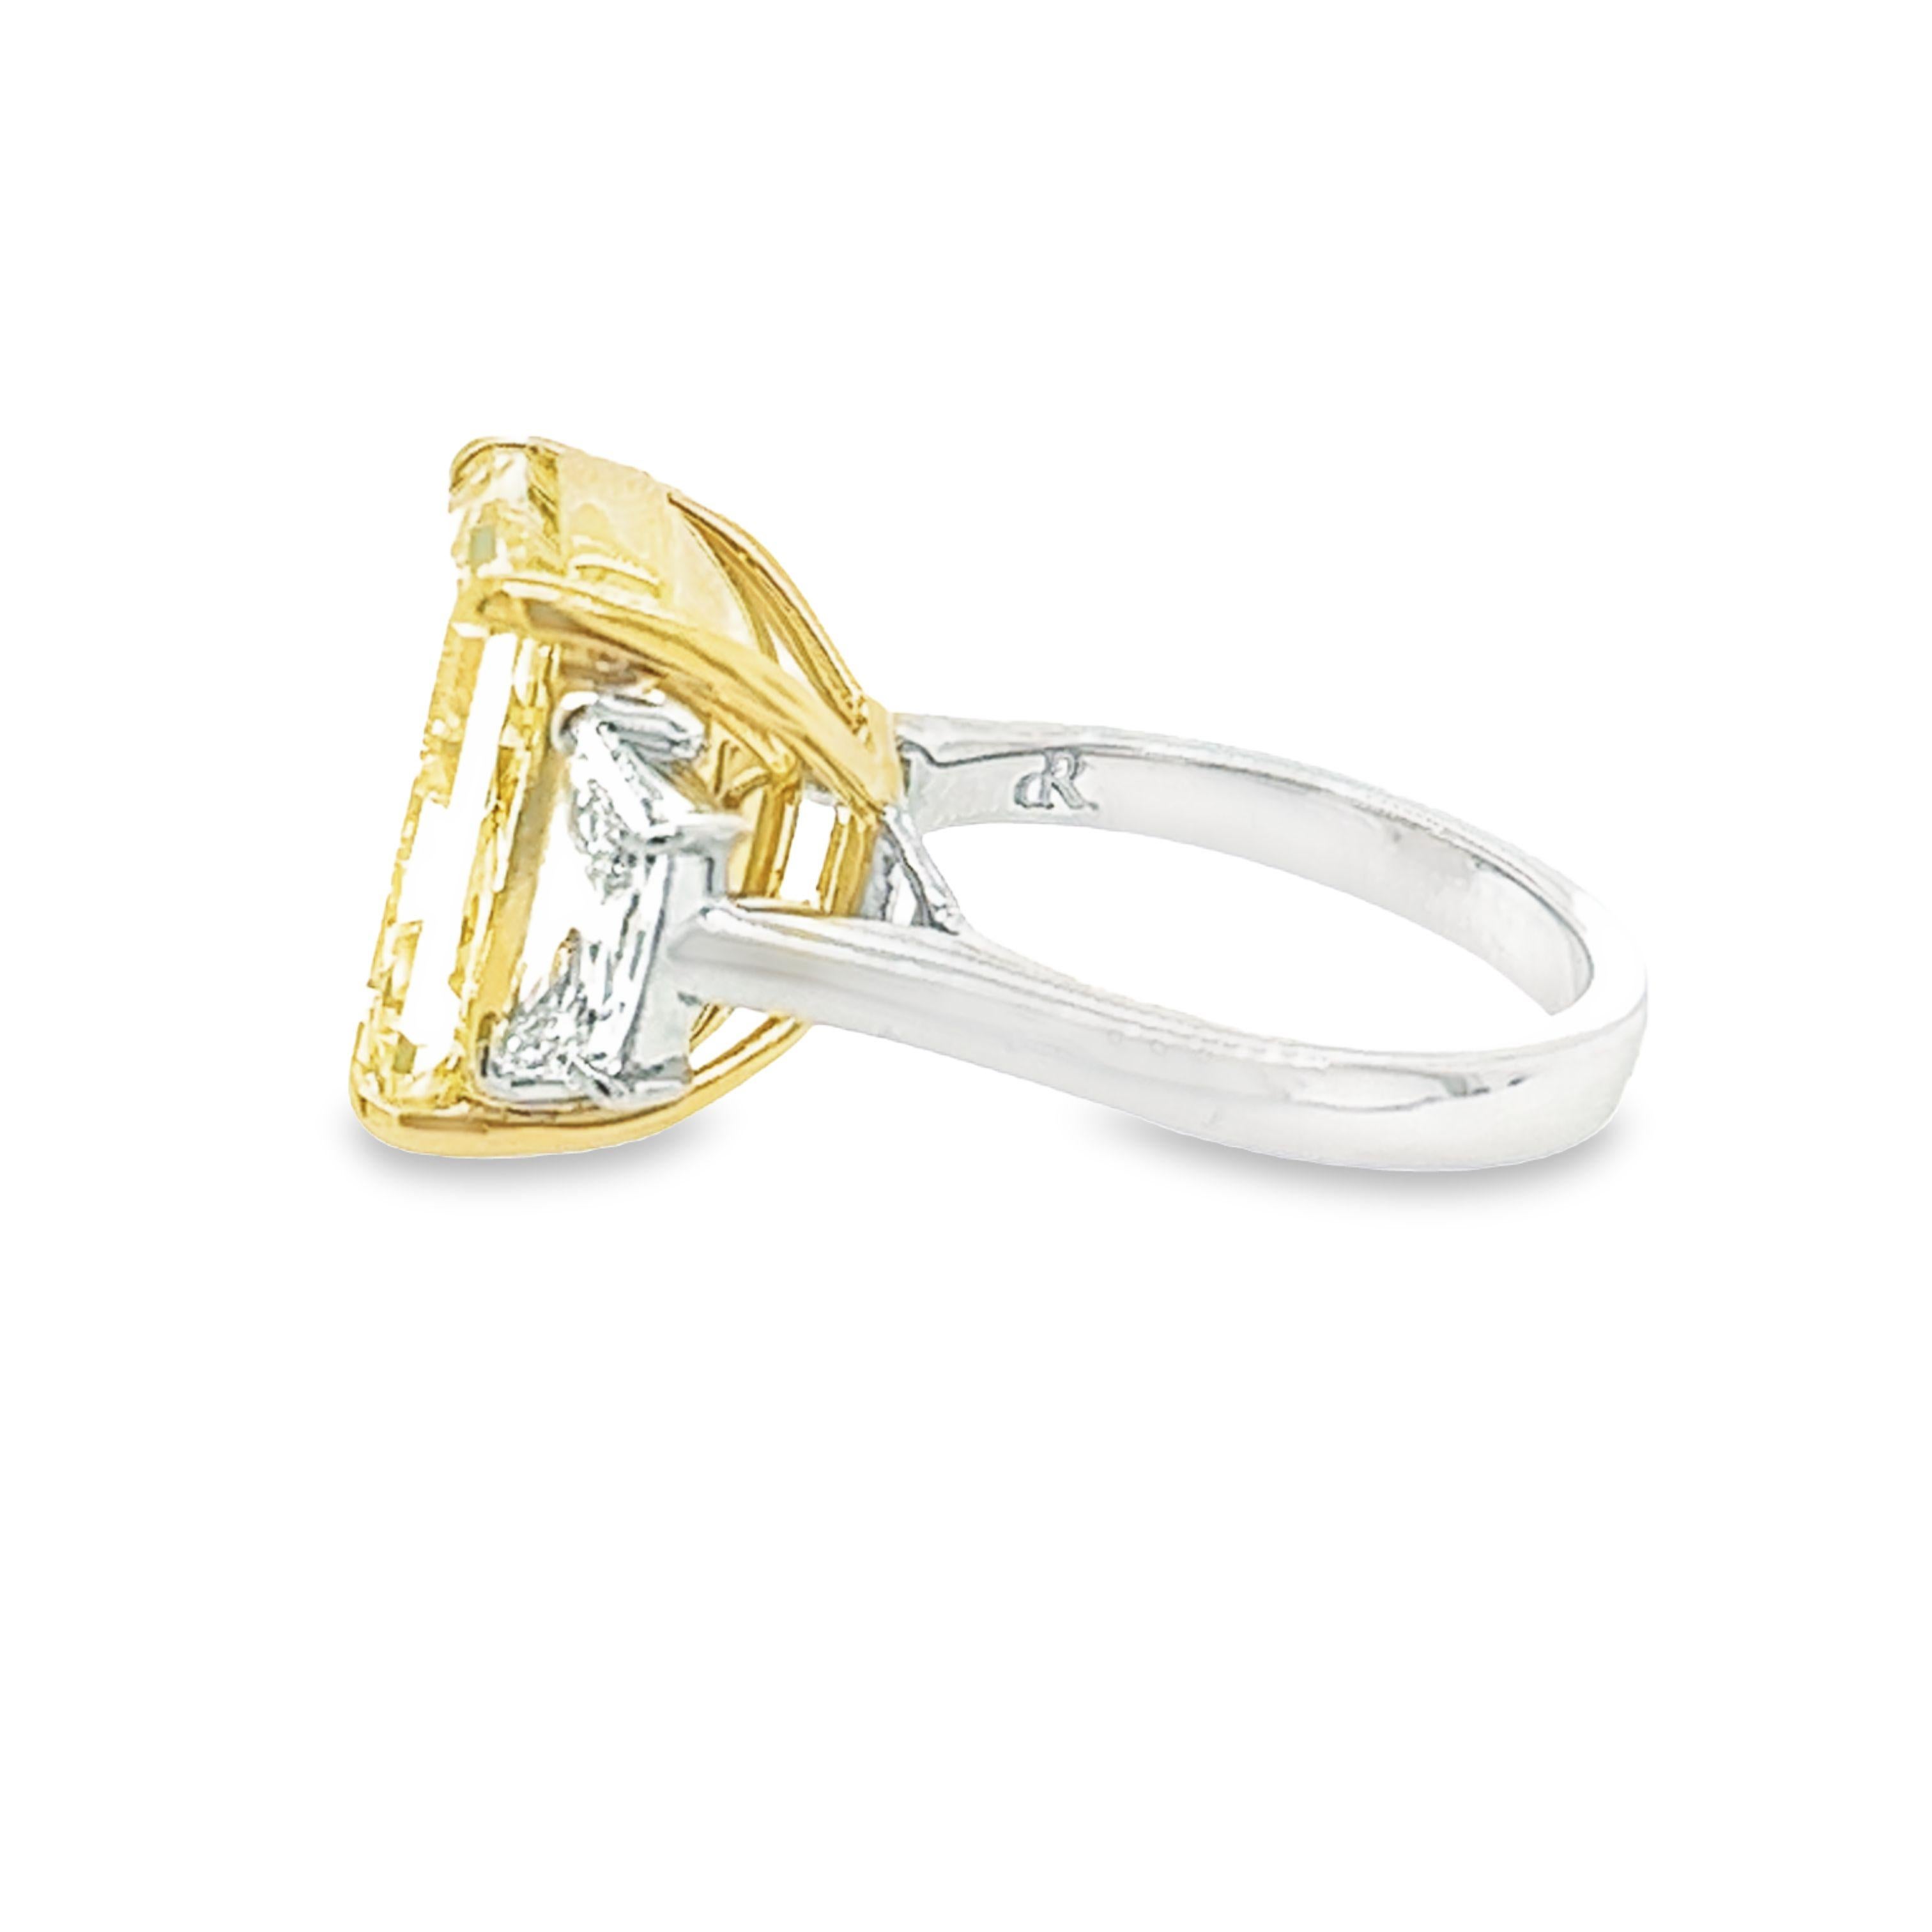 Verlobungsring mit 10,03 Karat strahlendem gelbem VS2 GIA-Diamant von David Rosenberg (Radiantschliff) im Angebot